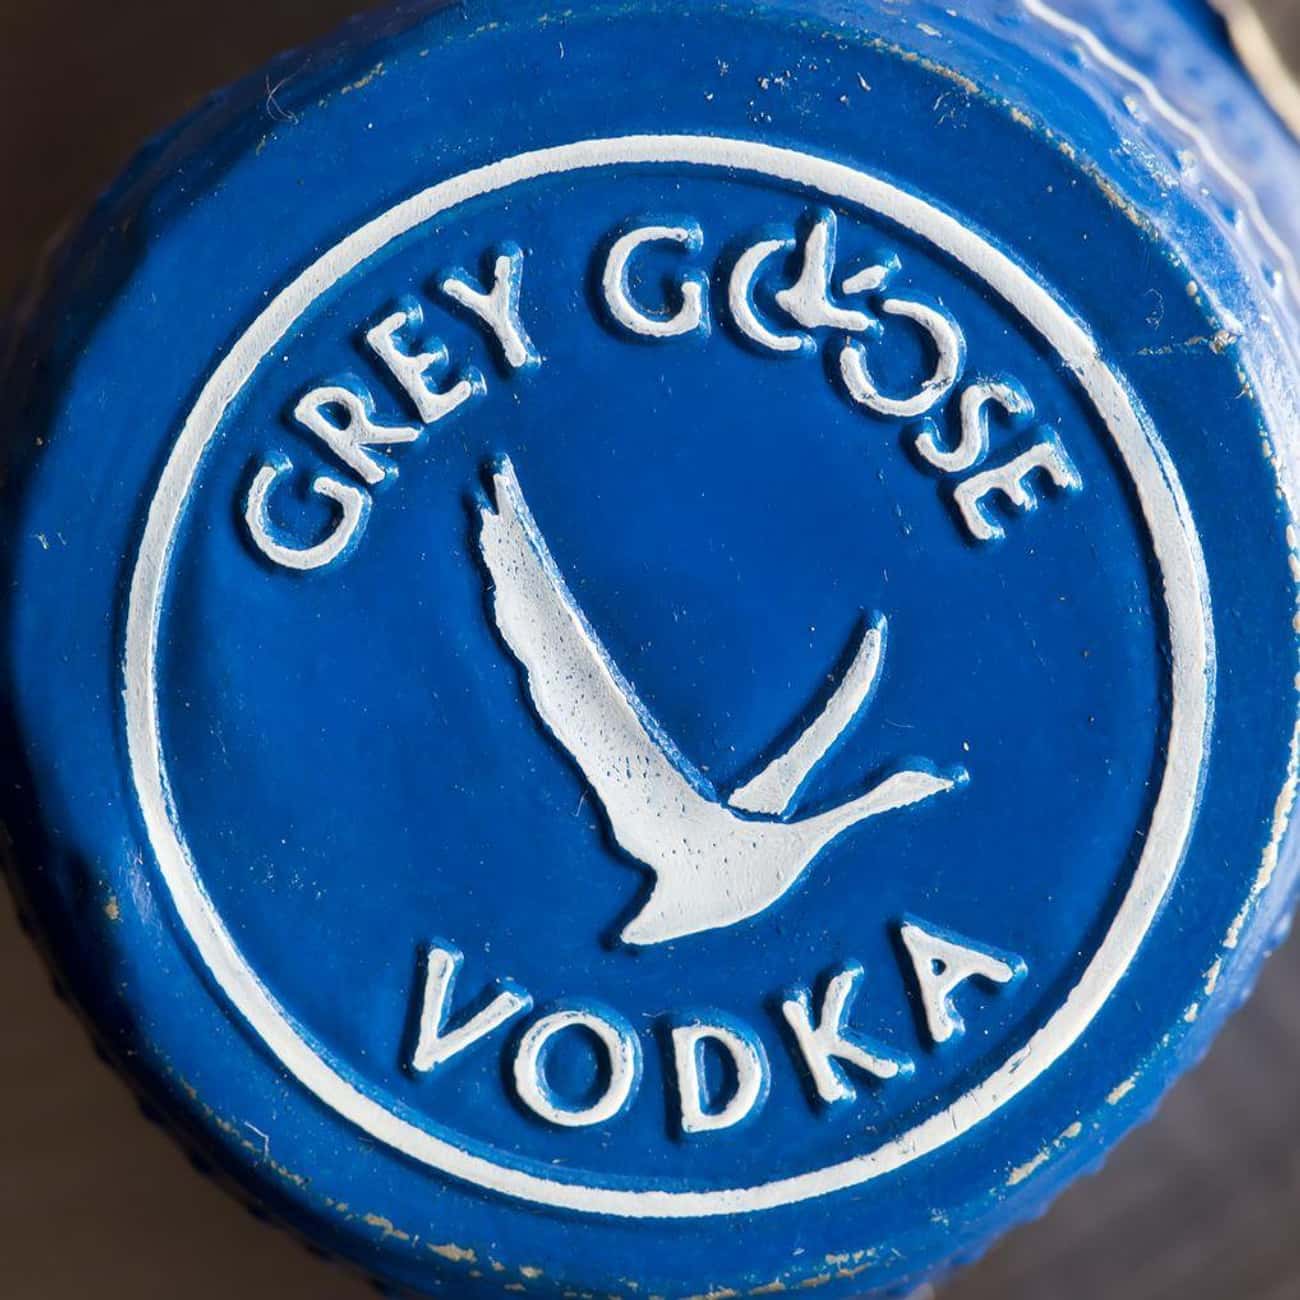 Grey Goose Is Beer